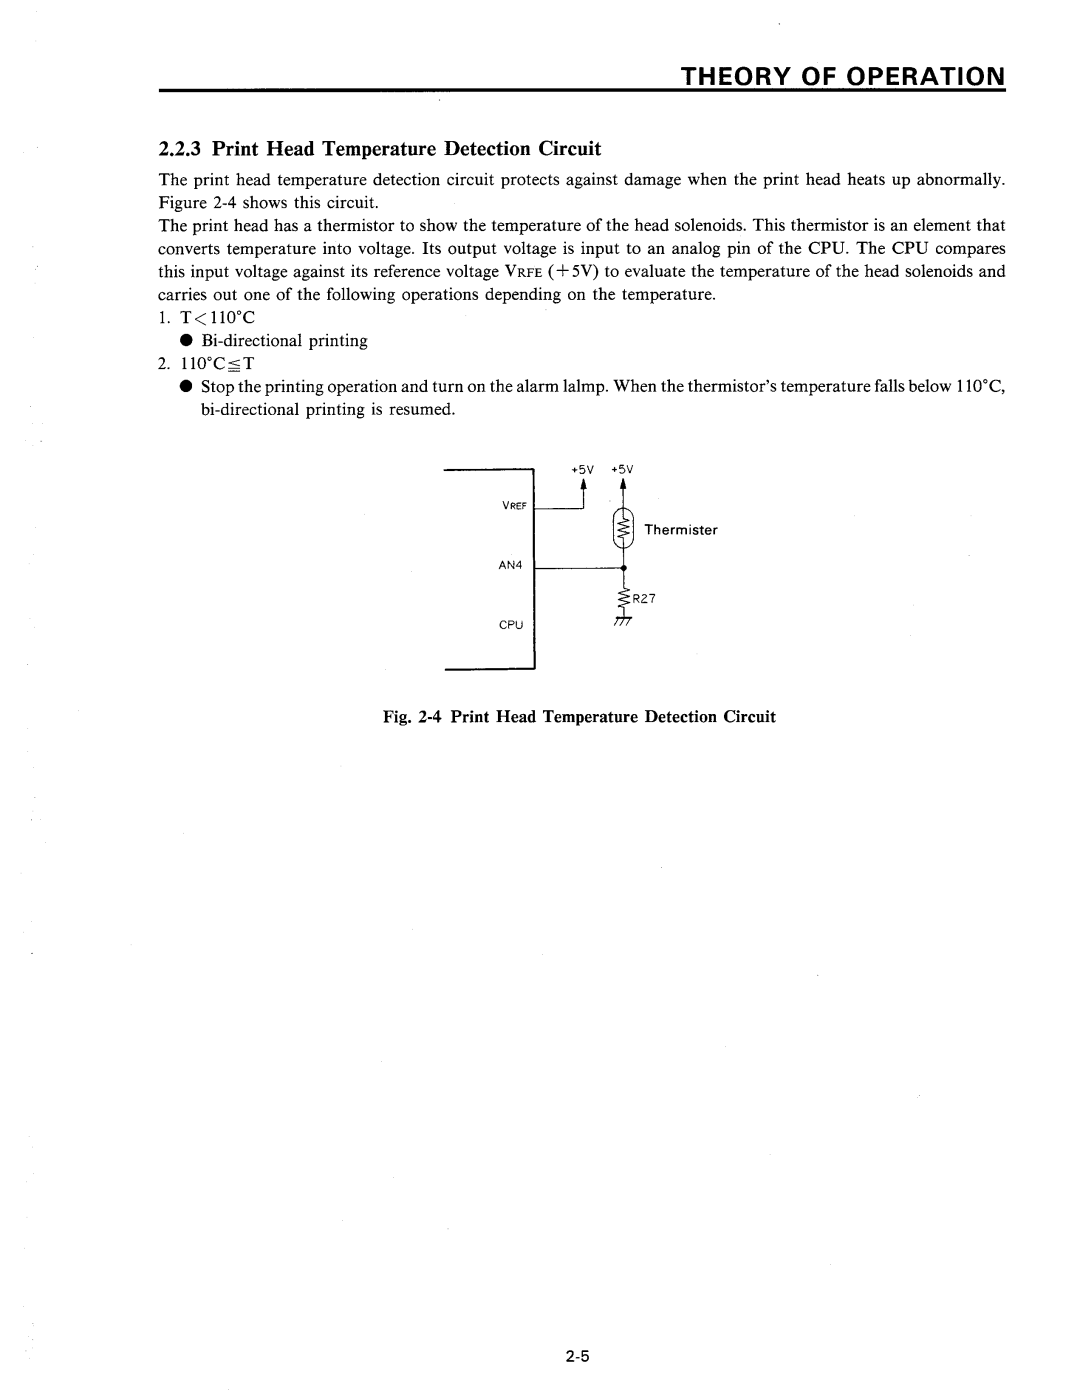 Star Micronics SP320S technical manual 